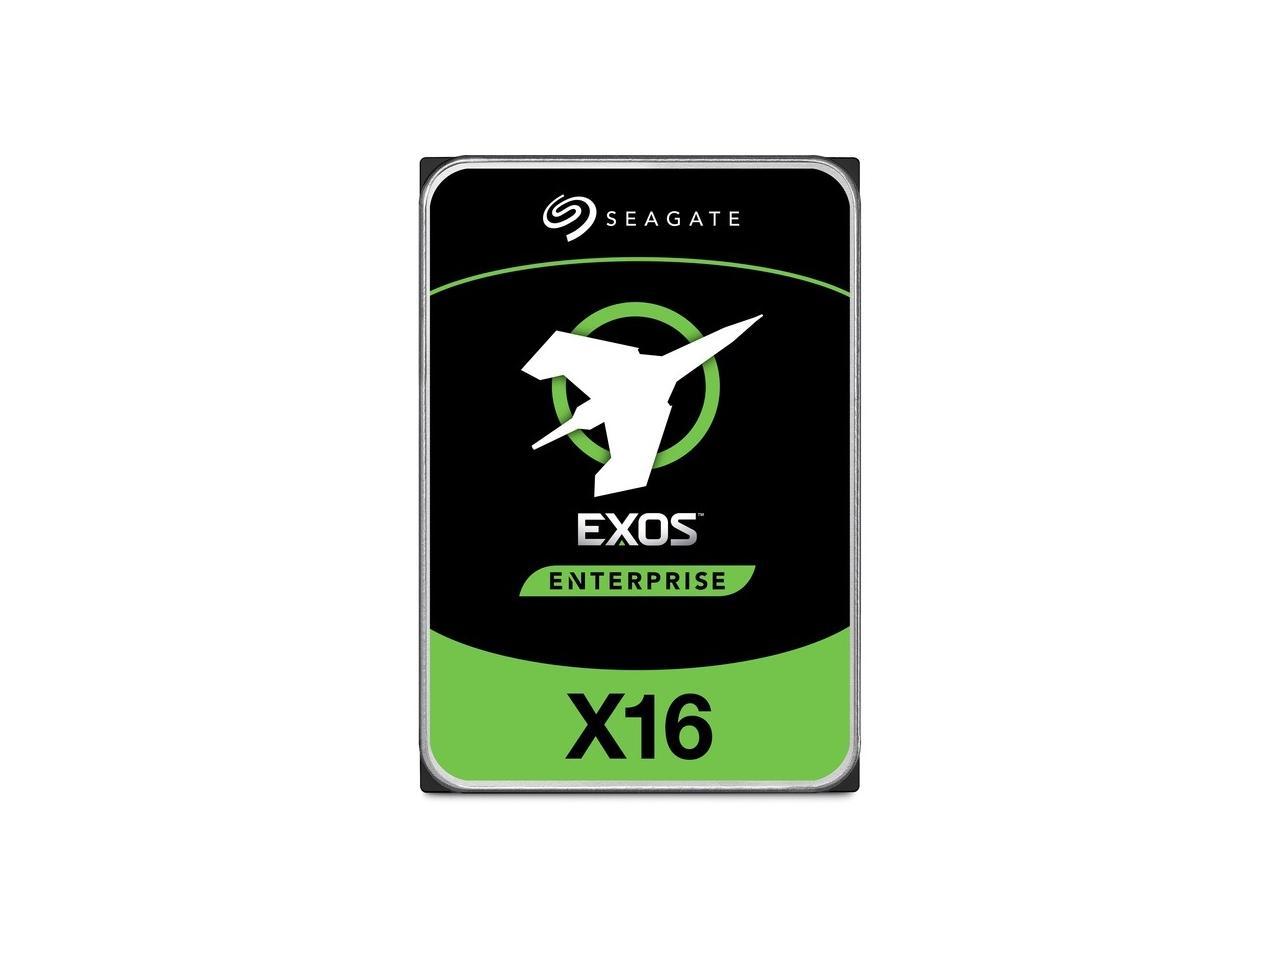 Seagate Exos X16 10Tb 7200 Rpm Sata 6Gb/S 3.5-Inch Enterprise Hard Drive (St10000Nm001G)